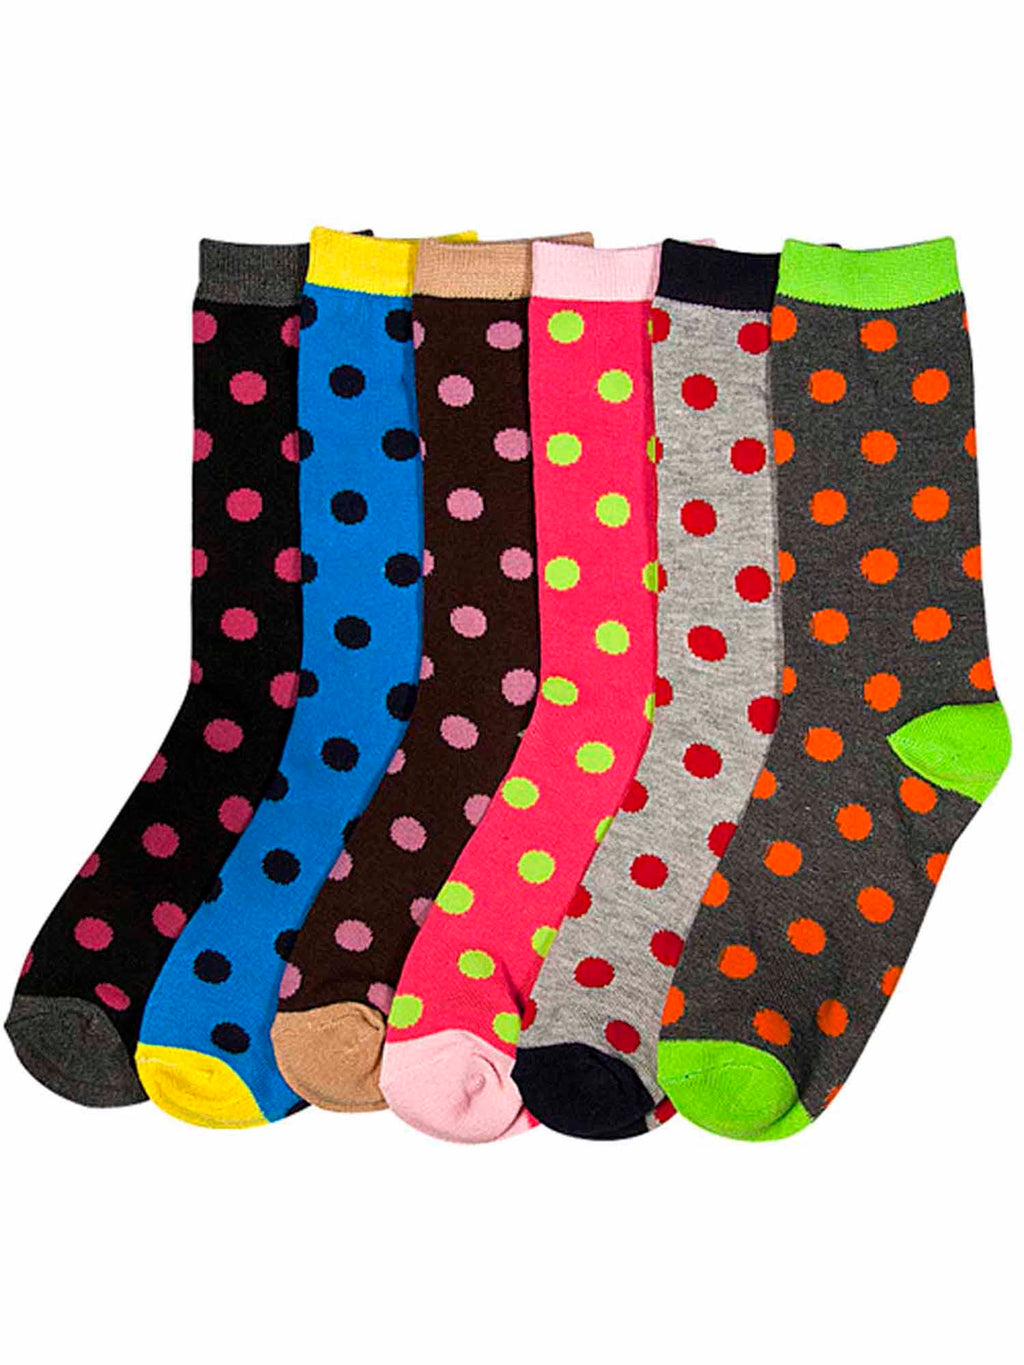 Colorful Polka Dot Print Womens 6 Pack Socks